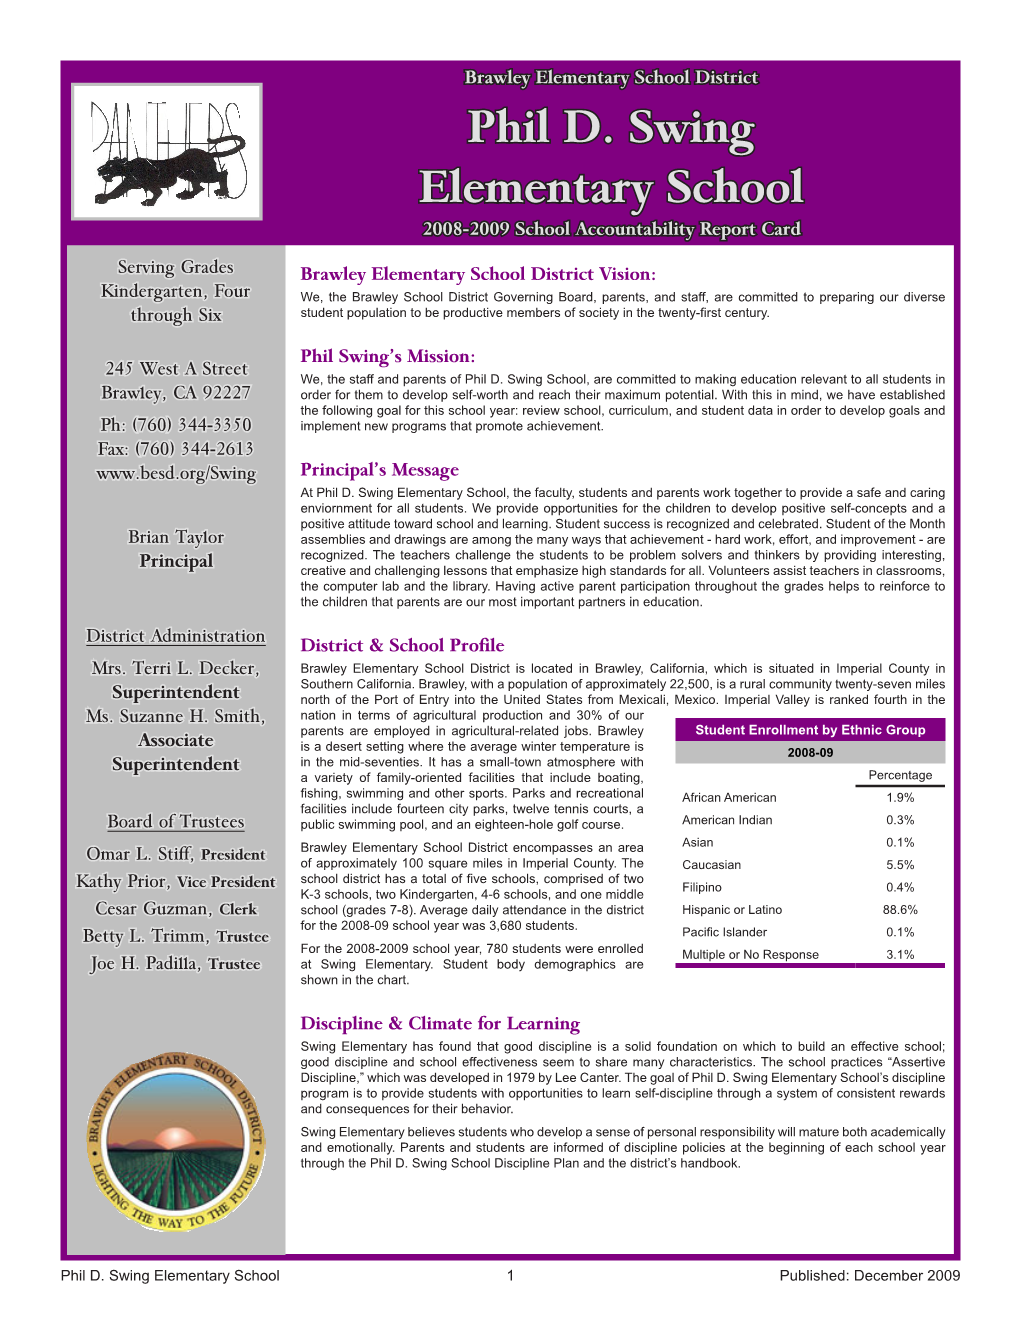 Phil D. Swing Elementary School 2008-2009 School Accountability Report Card